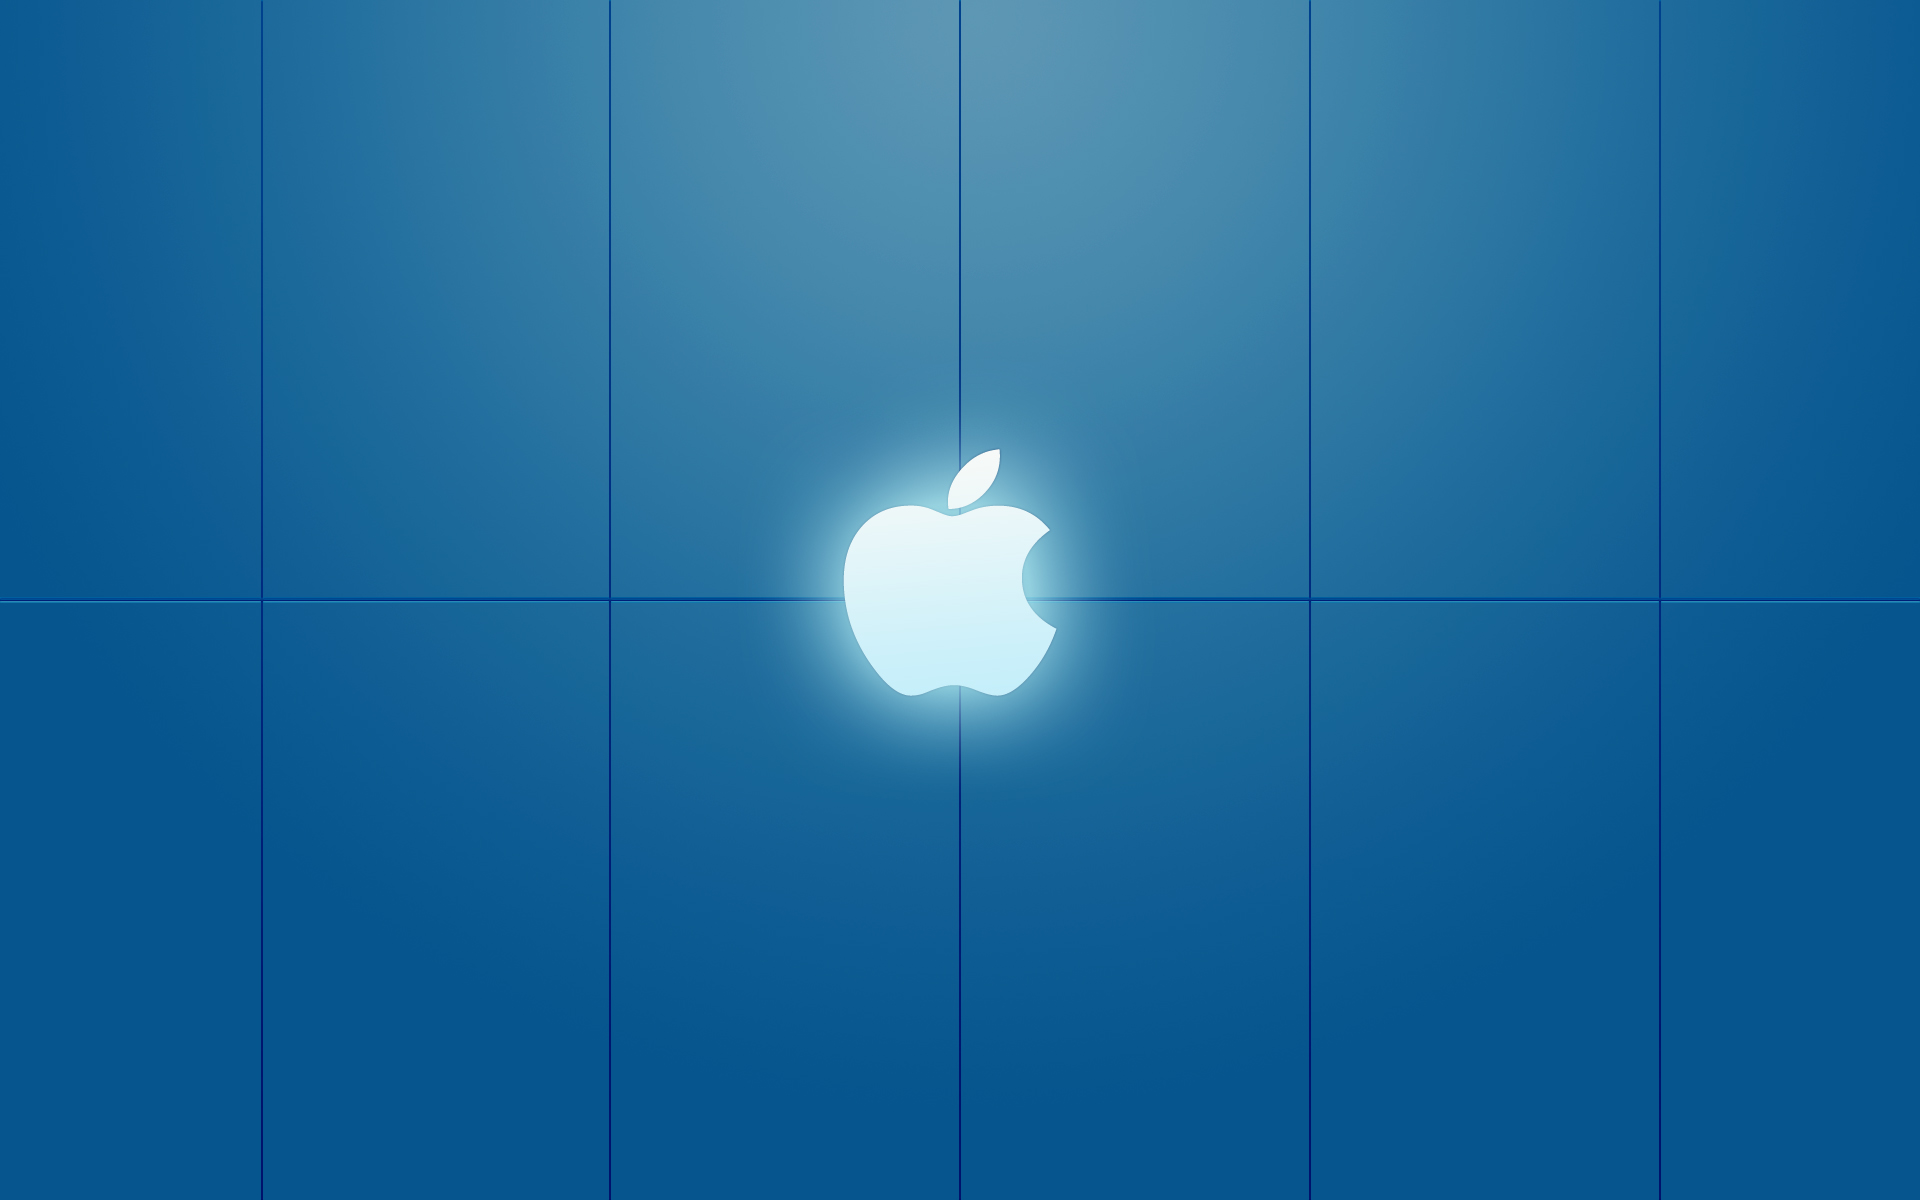 50 Inspiring Apple Mac amp iPad Wallpapers For Download